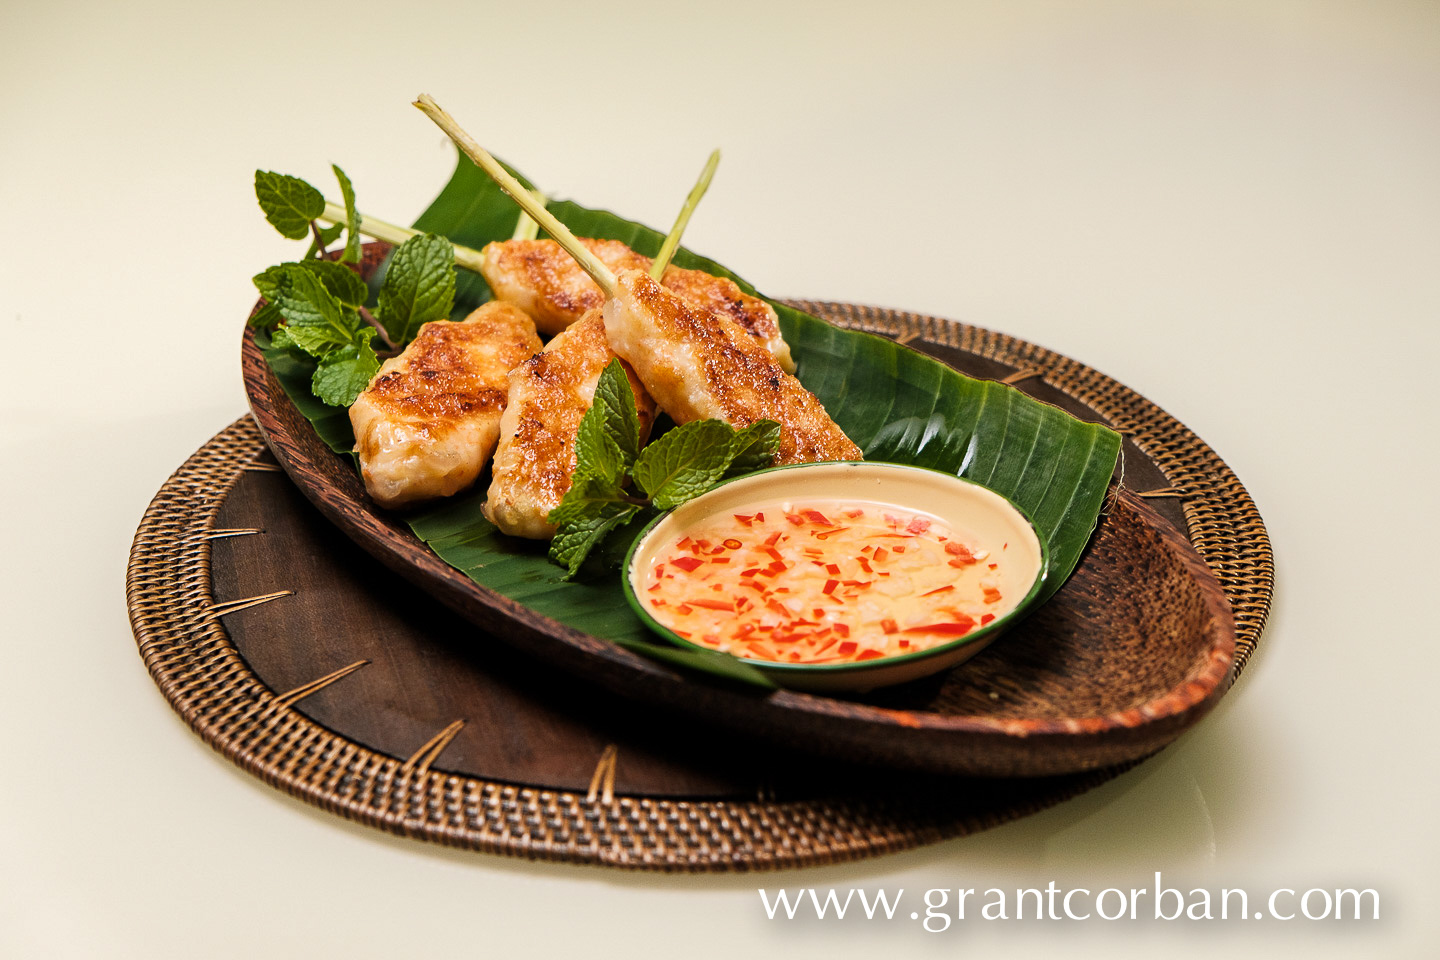 good food photographer in kl pj petaling jaya